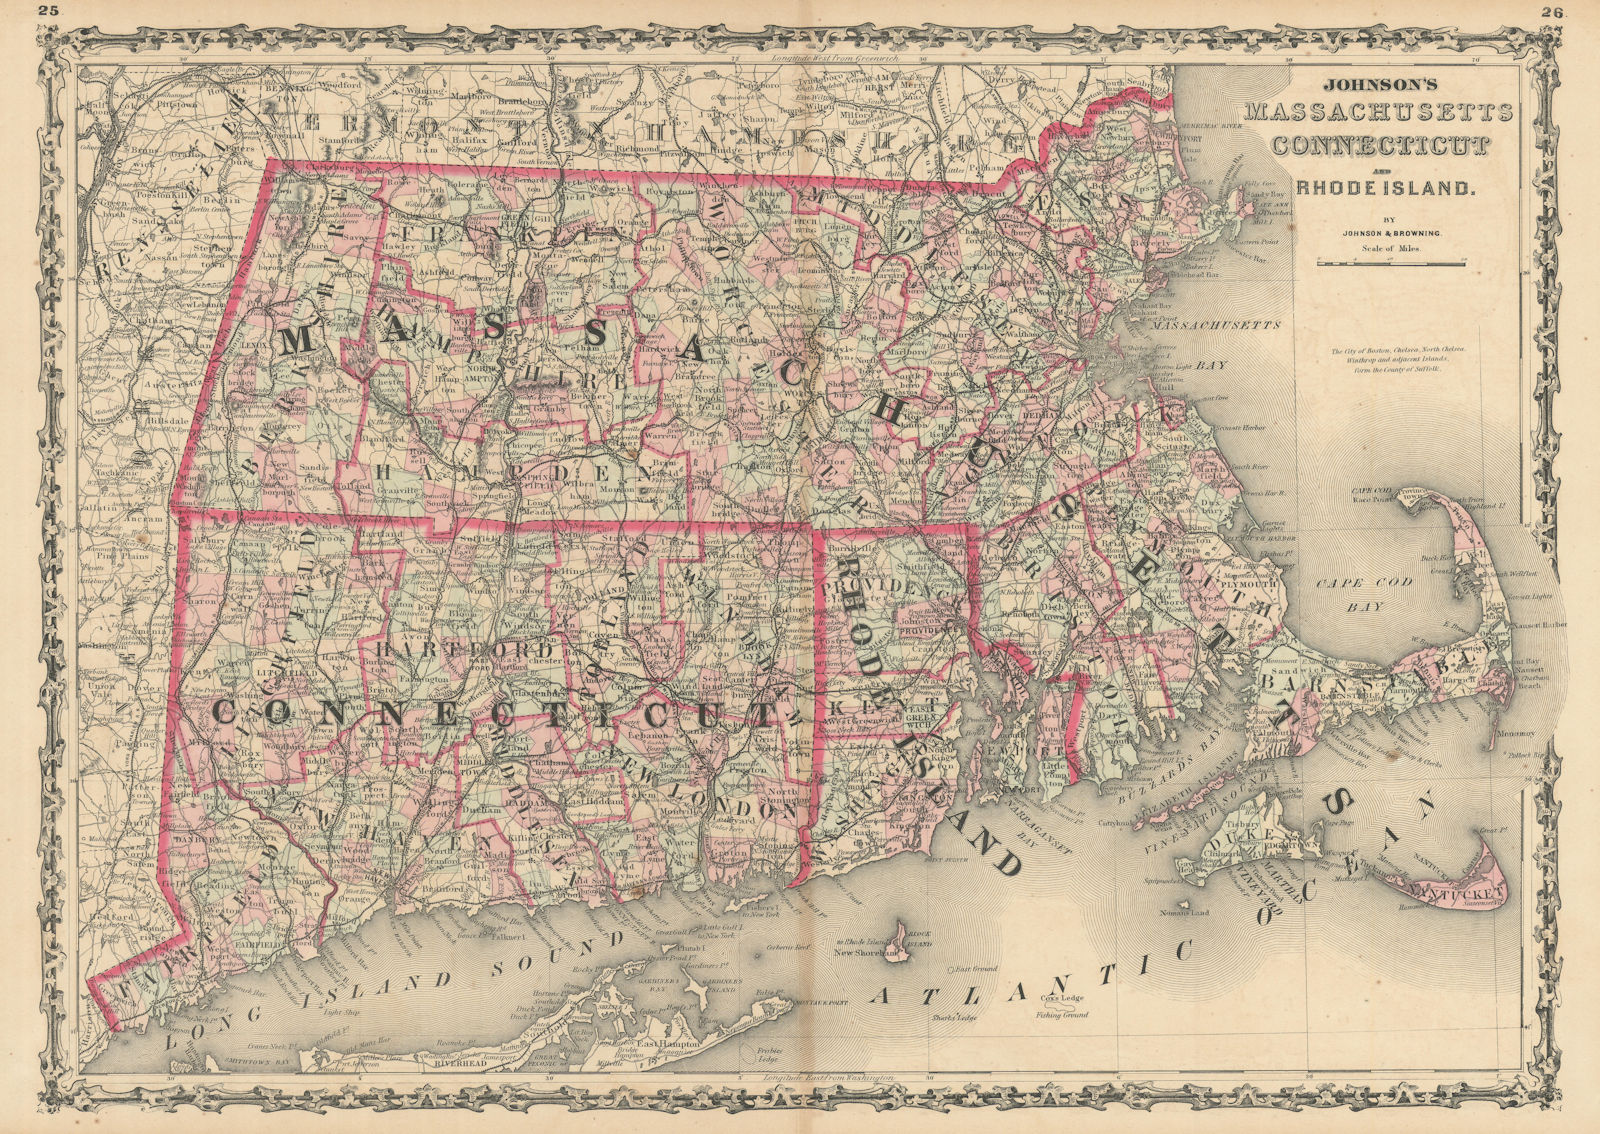 Johnson's Massachusetts, Connecticut & Rhode Island. New England 1861 old map